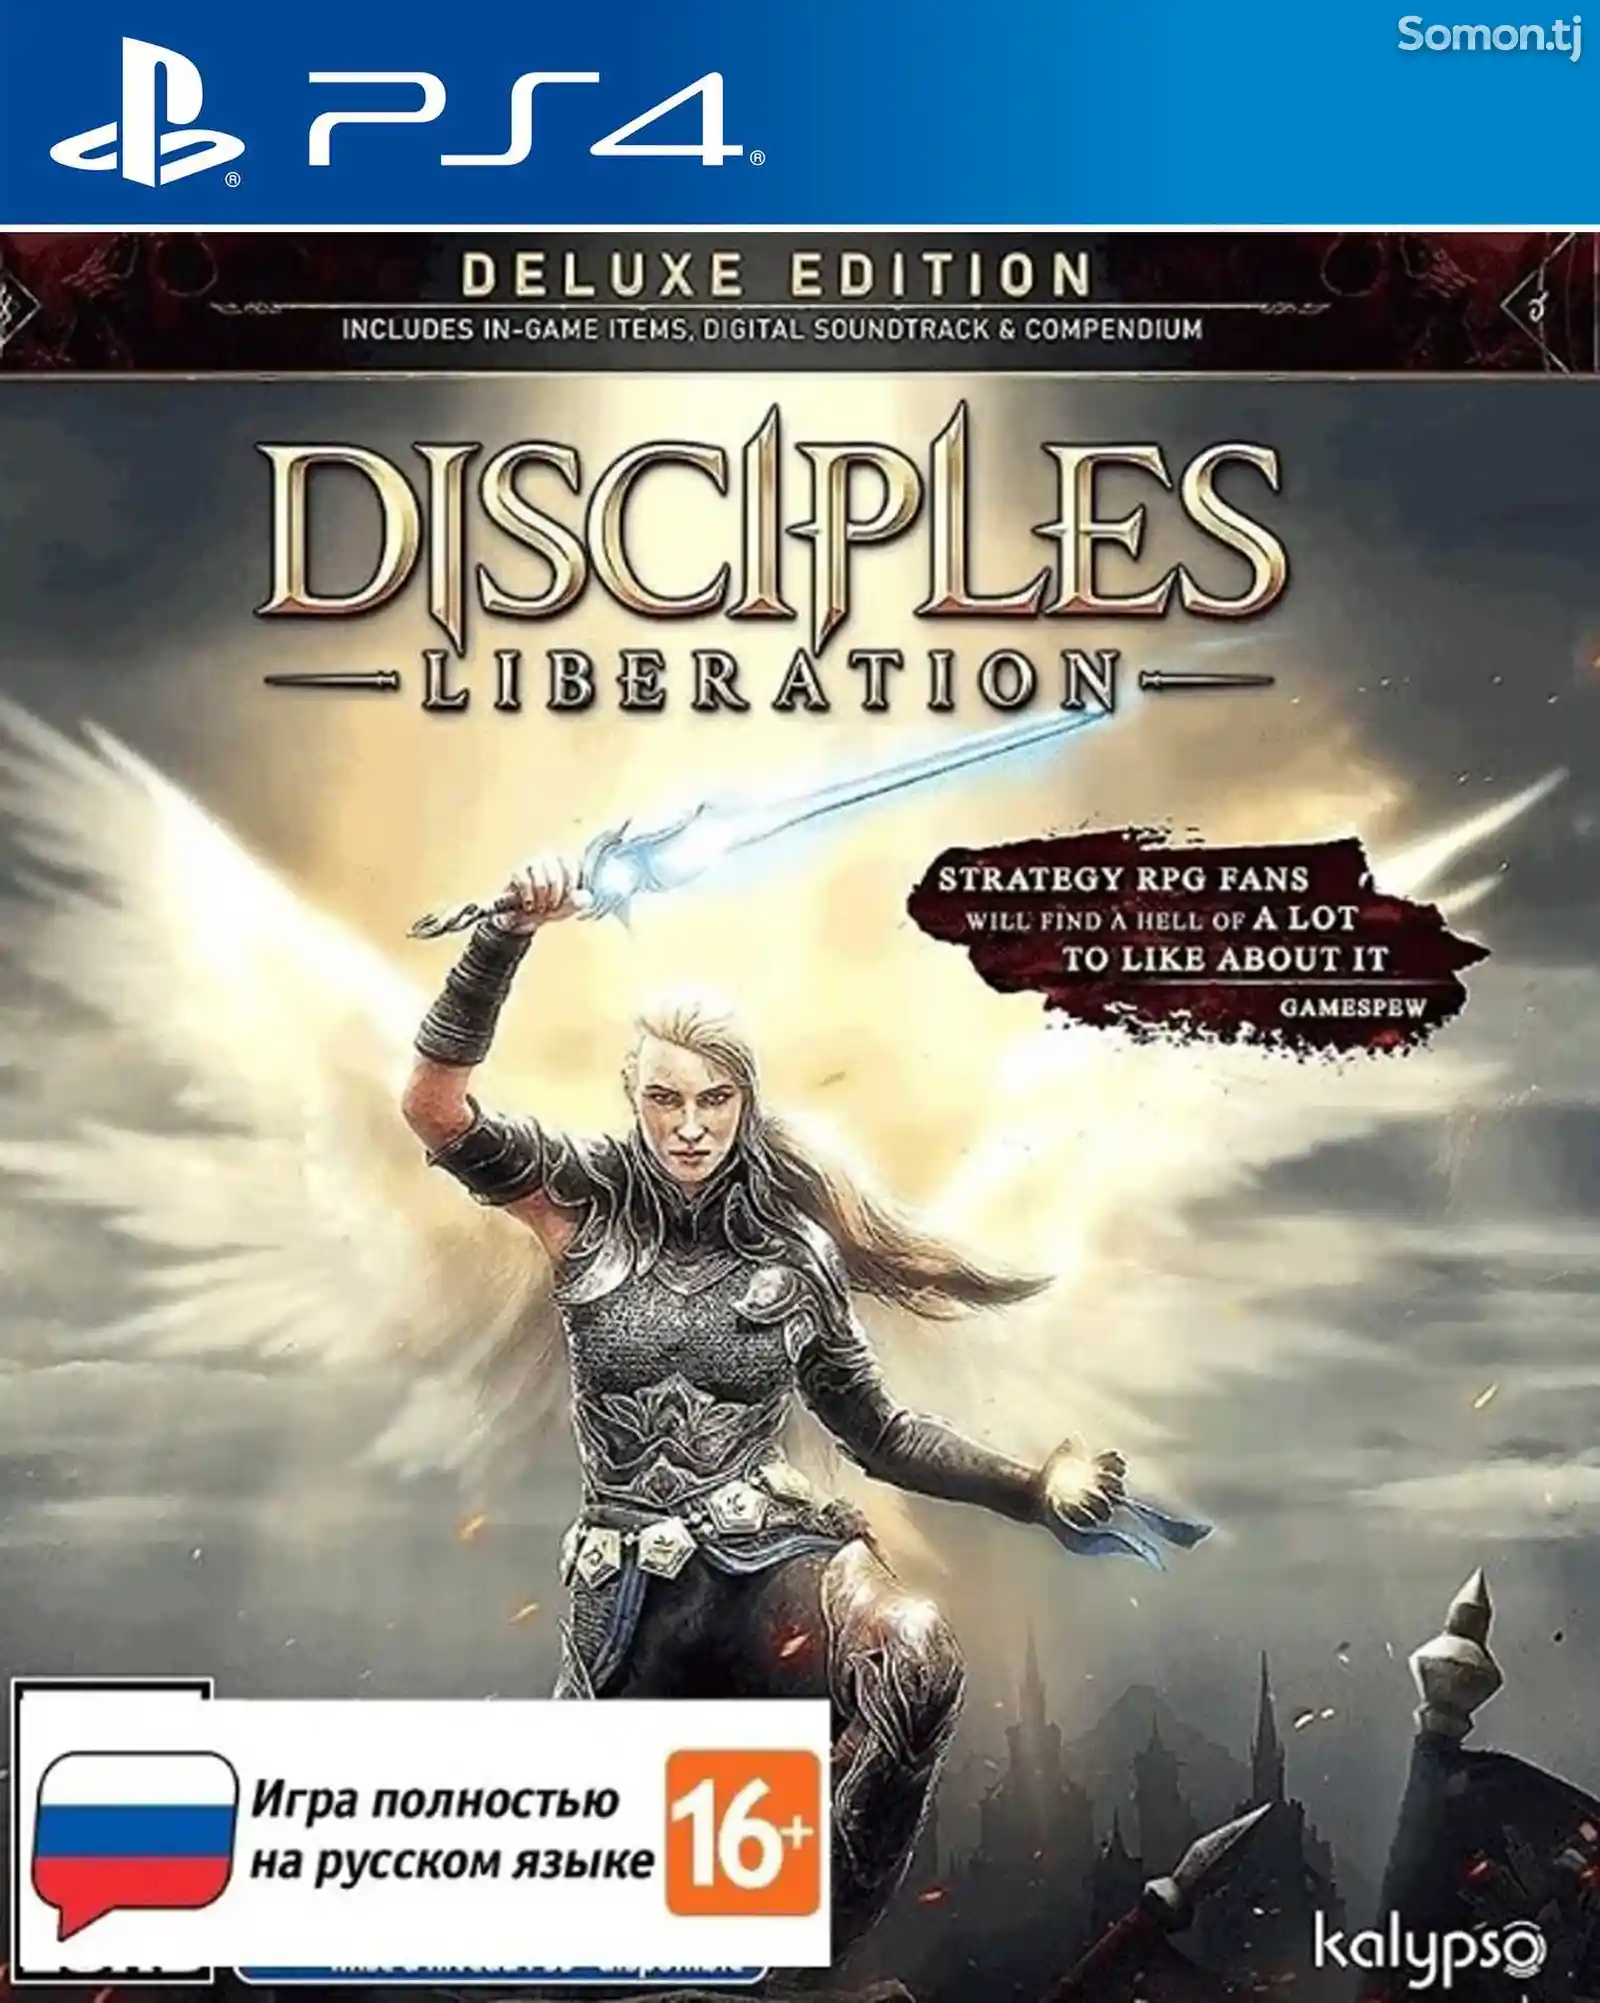 Игра Disciples liberation для PS-4 / 5.05 / 6.72 / 7.02 / 7.55 / 9.00 /-1